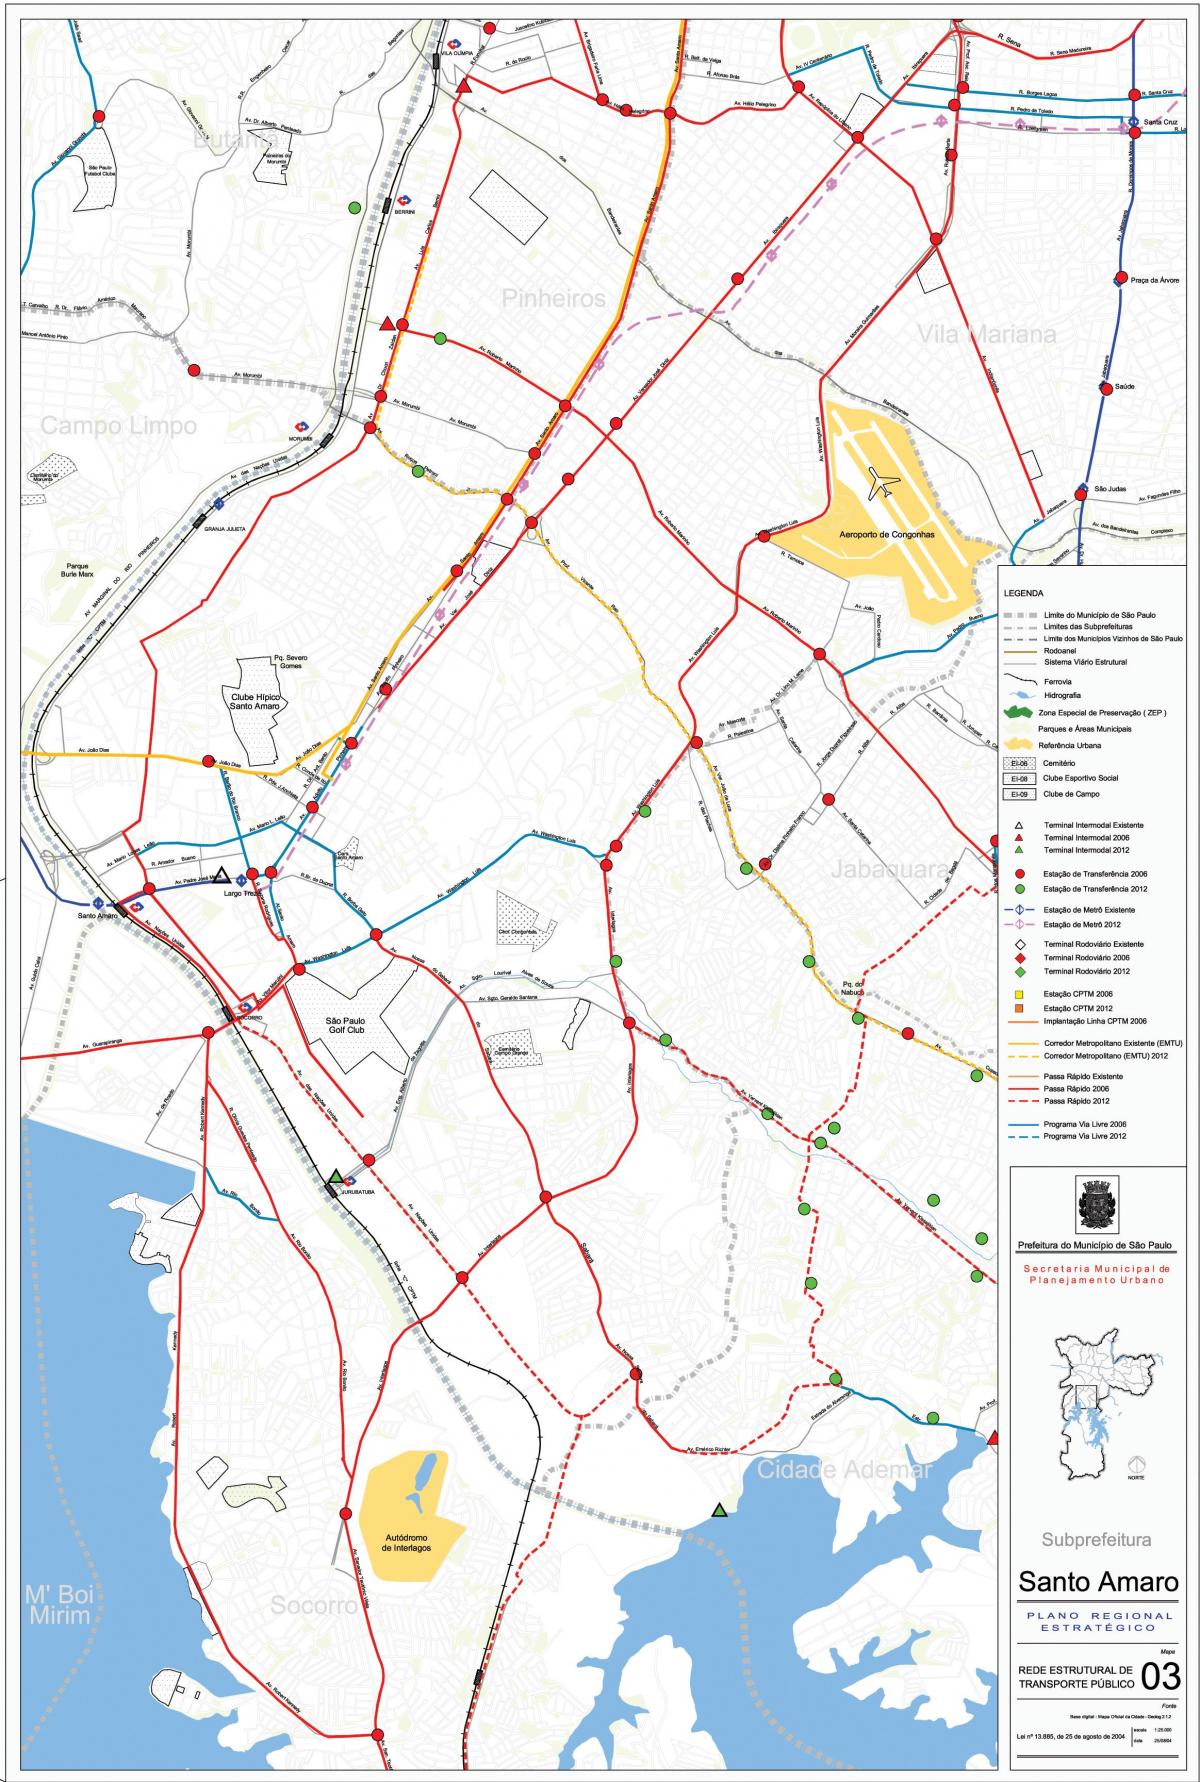 Kaart van Santo Amaro São Paulo - Openbare vervoer